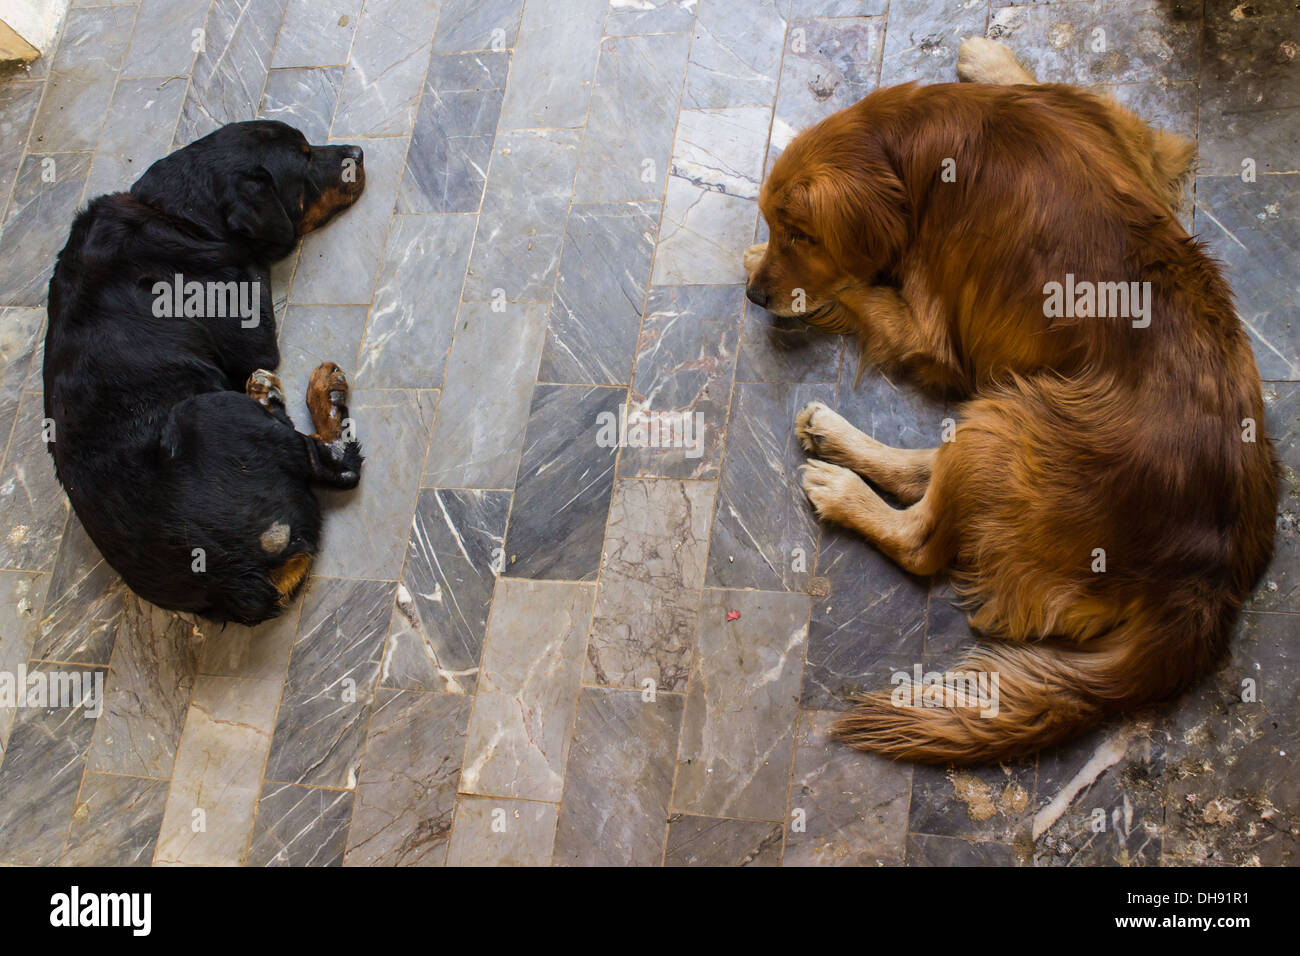 Two Dog Sleep on Marble Floors Stock Photo